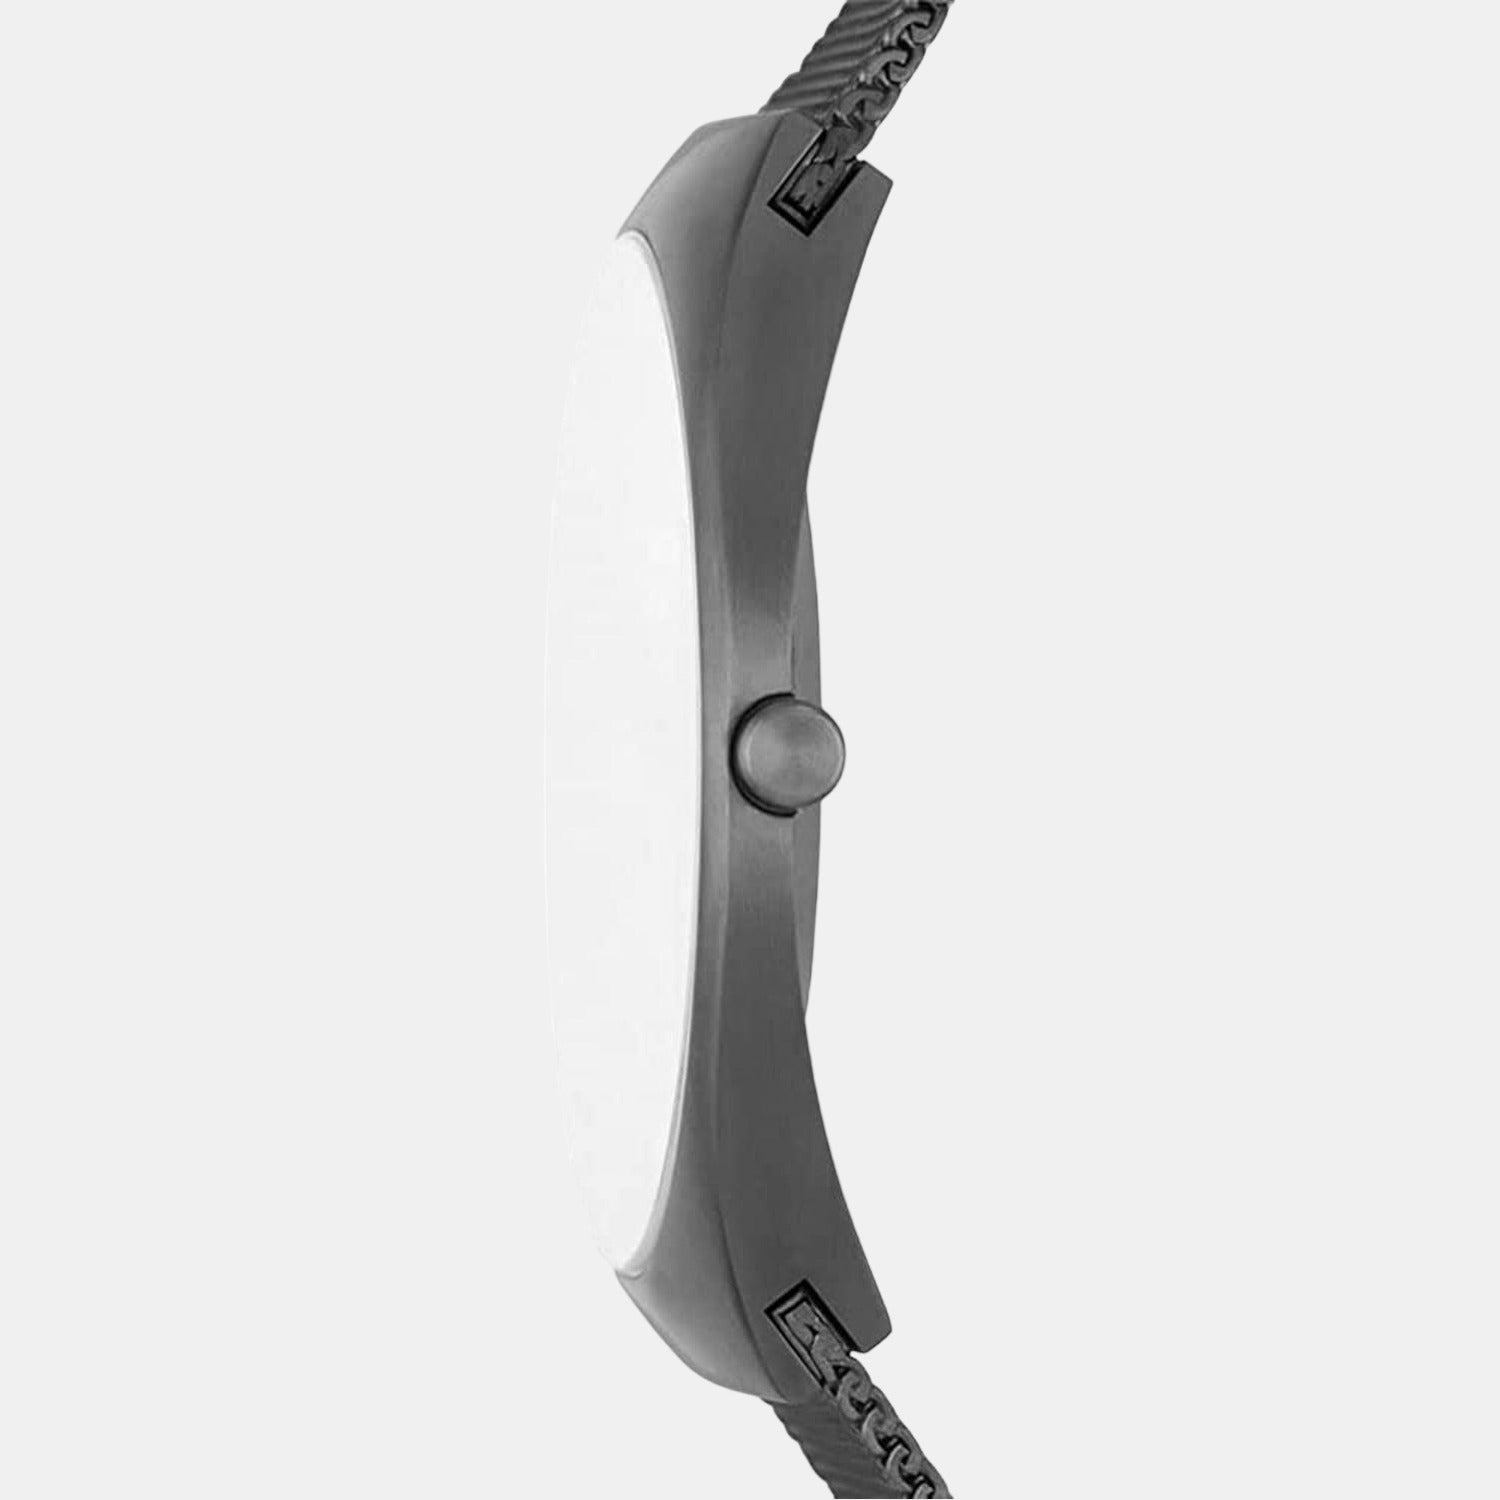 Grenen Ultra Slim Two-Hand Midnight Stainless Steel Mesh Watch